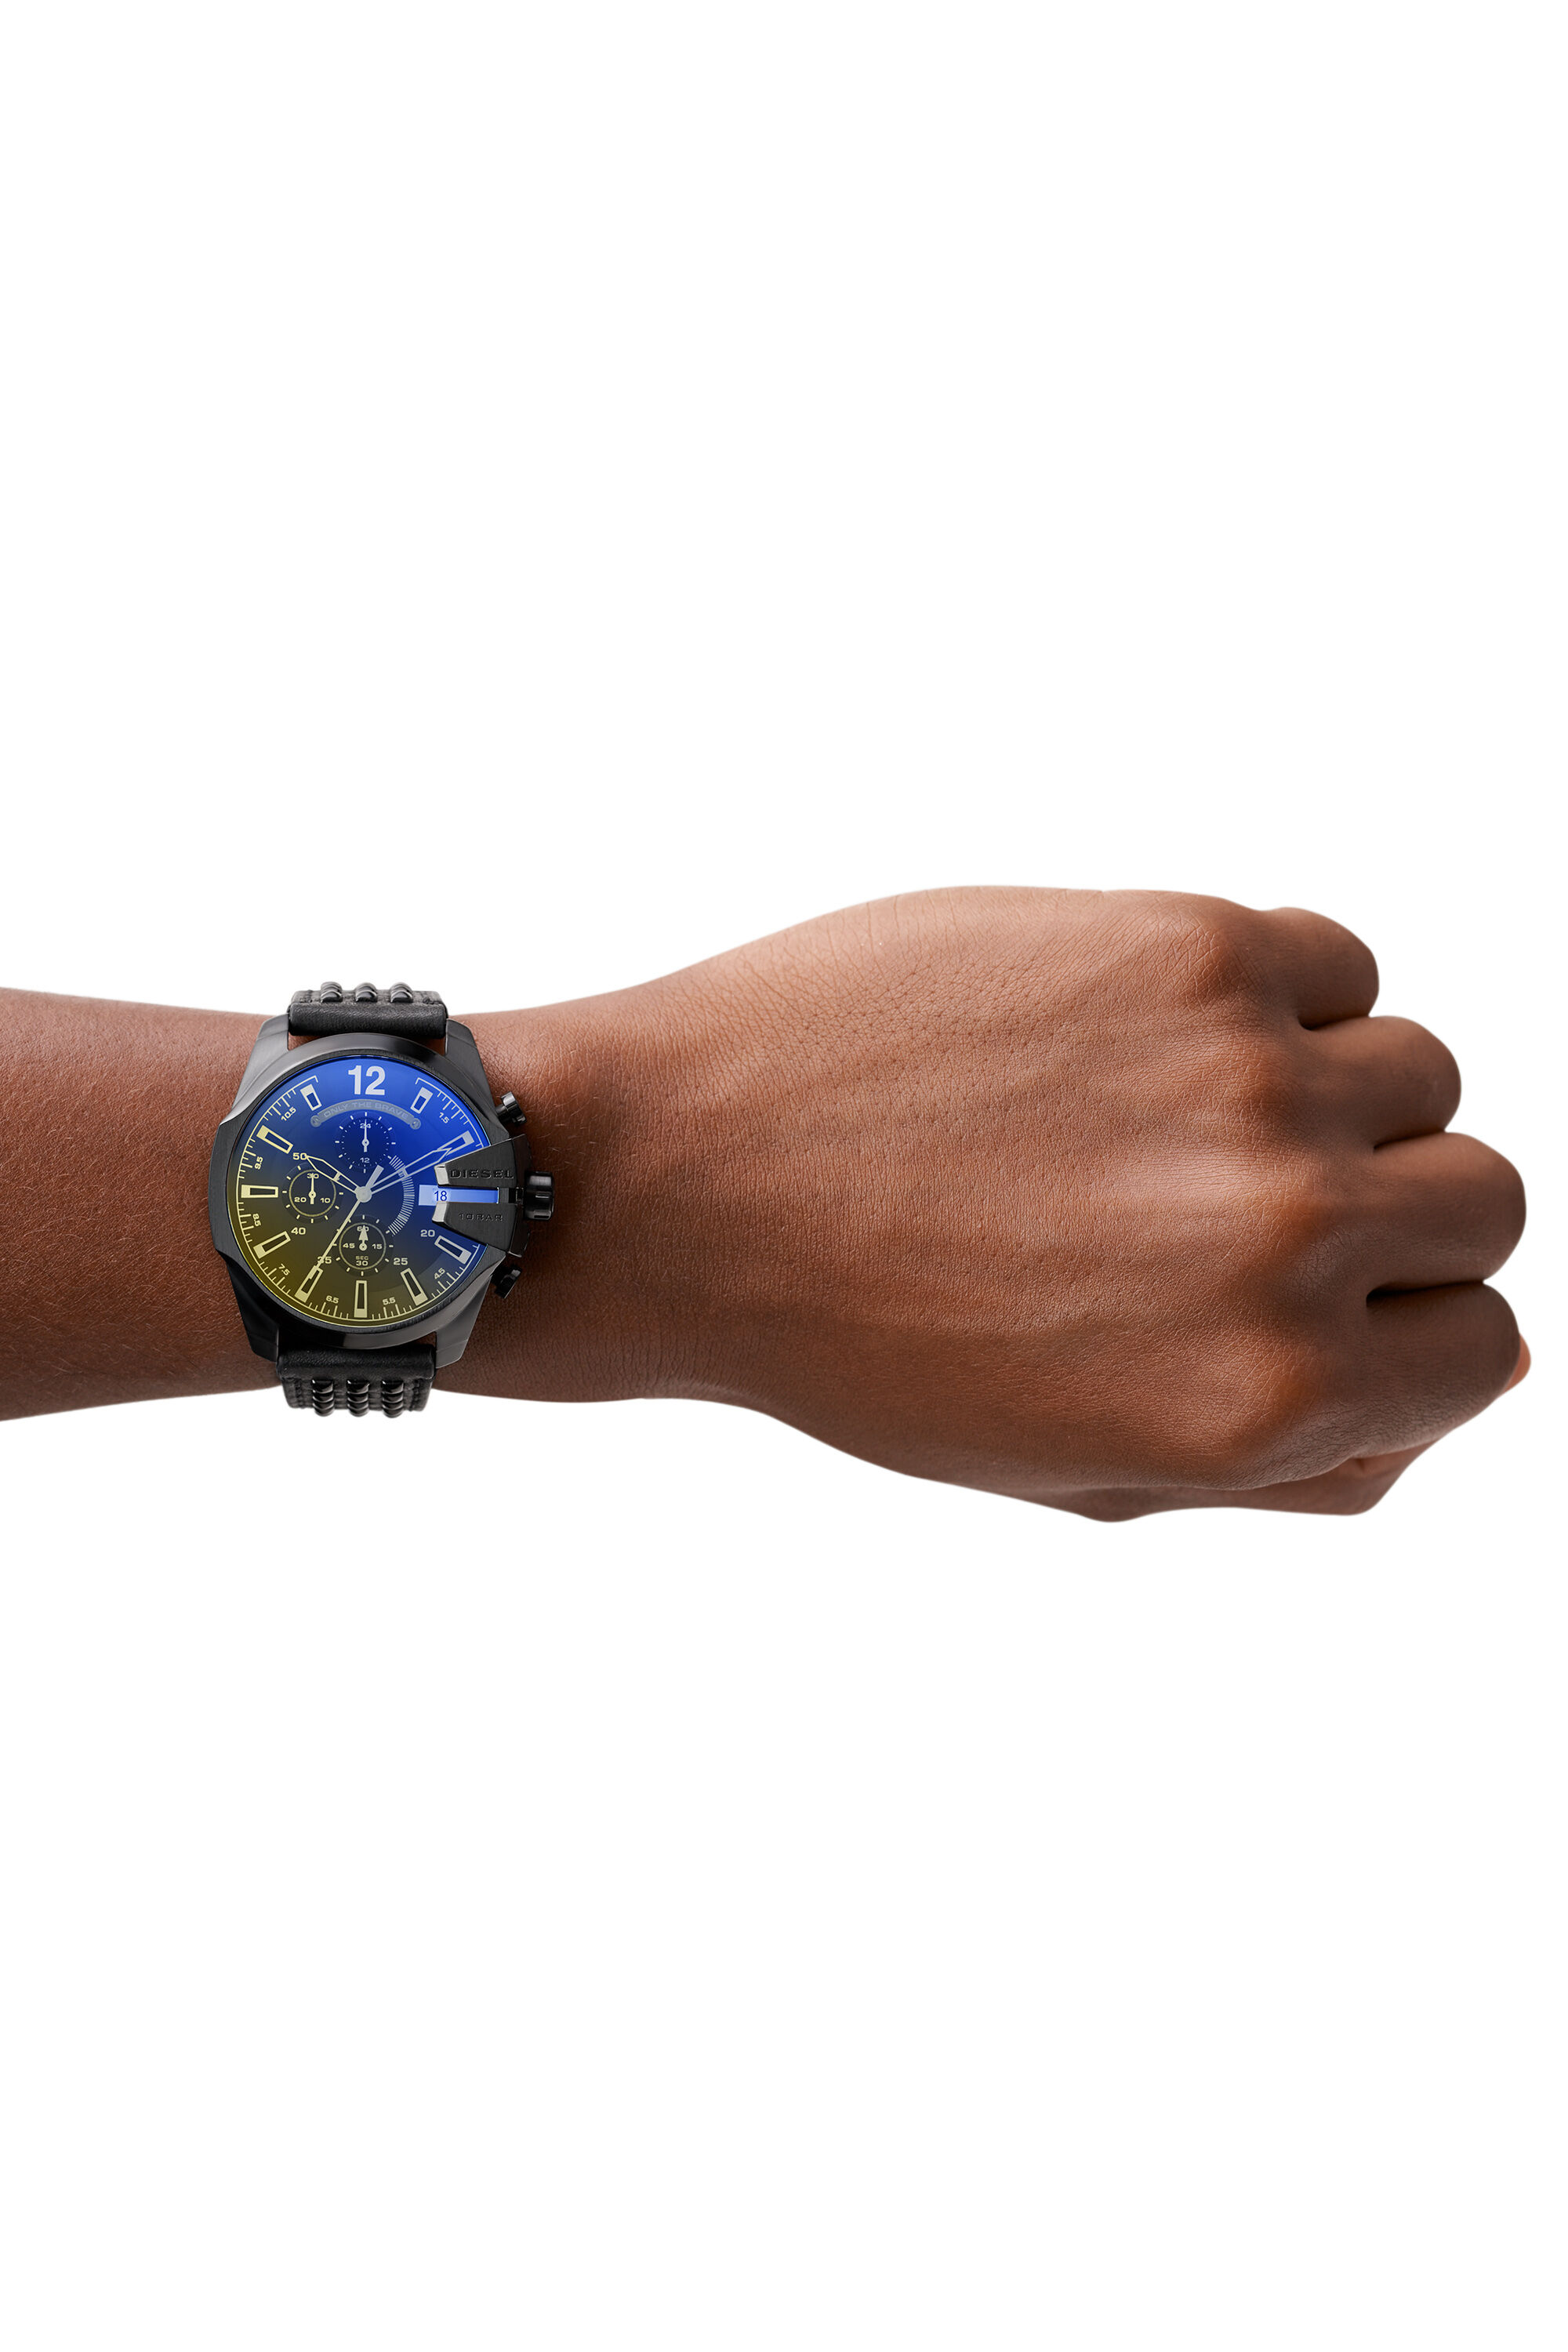 DZ4567 Man: Baby Chief chronograph black leather watch | Diesel